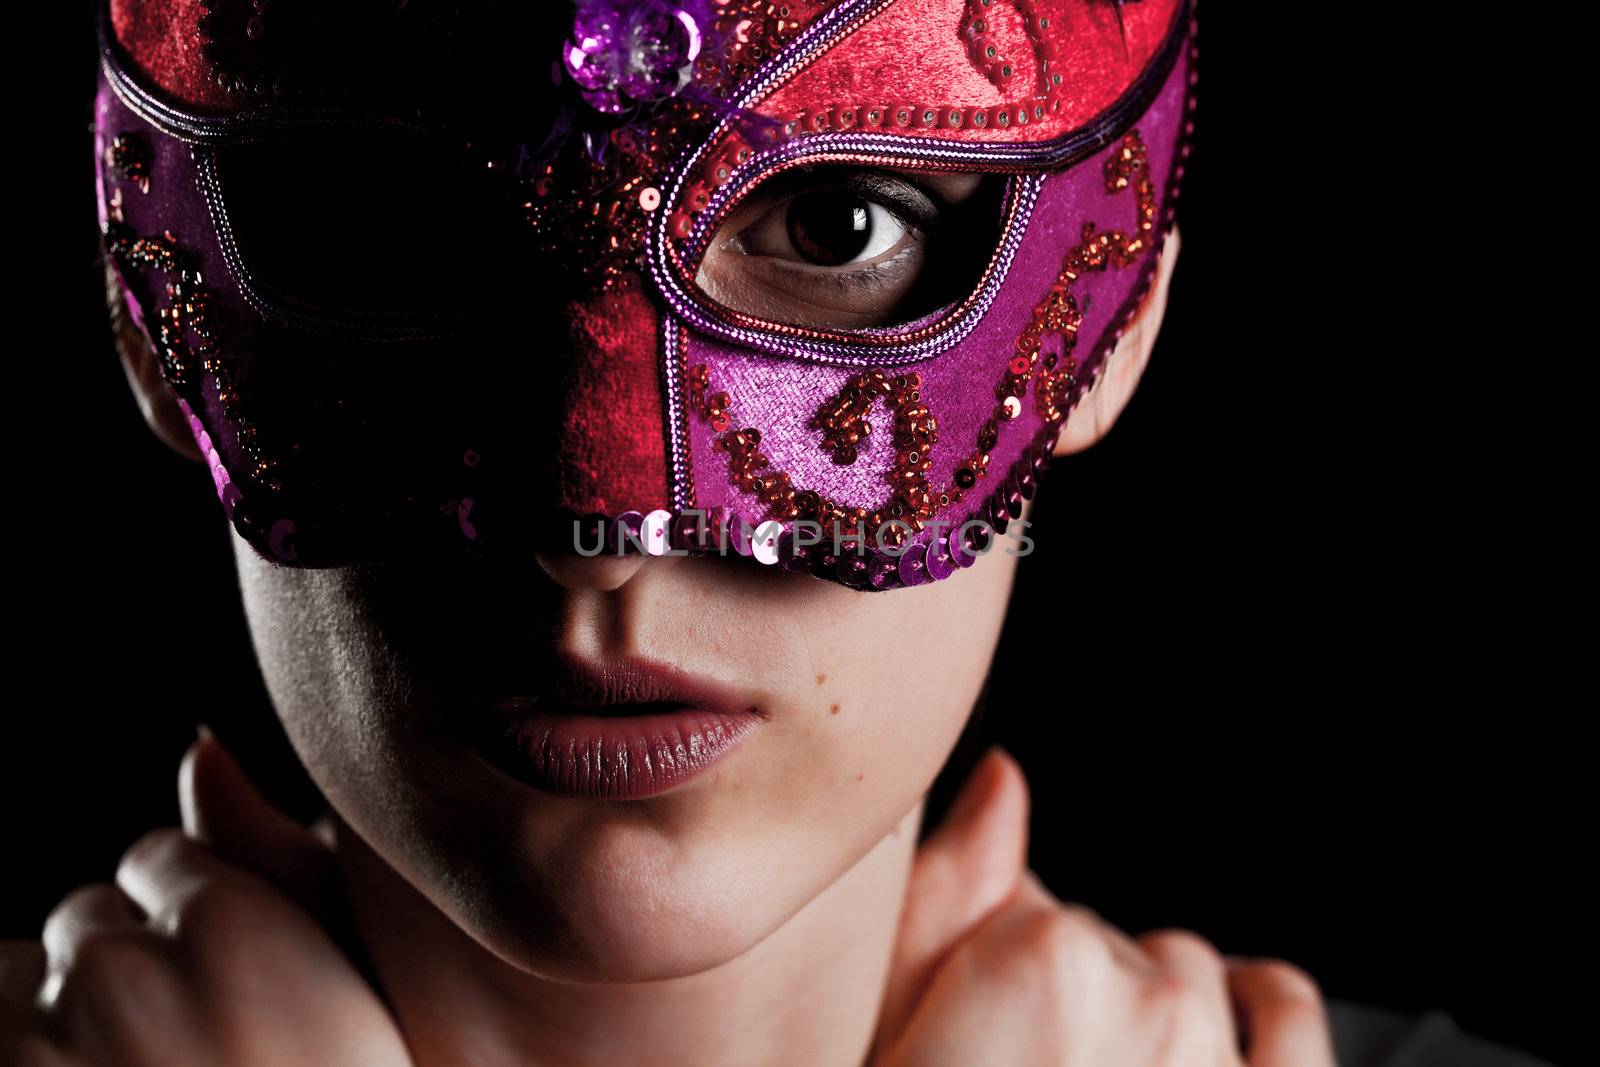 Girl with mask by kokimk